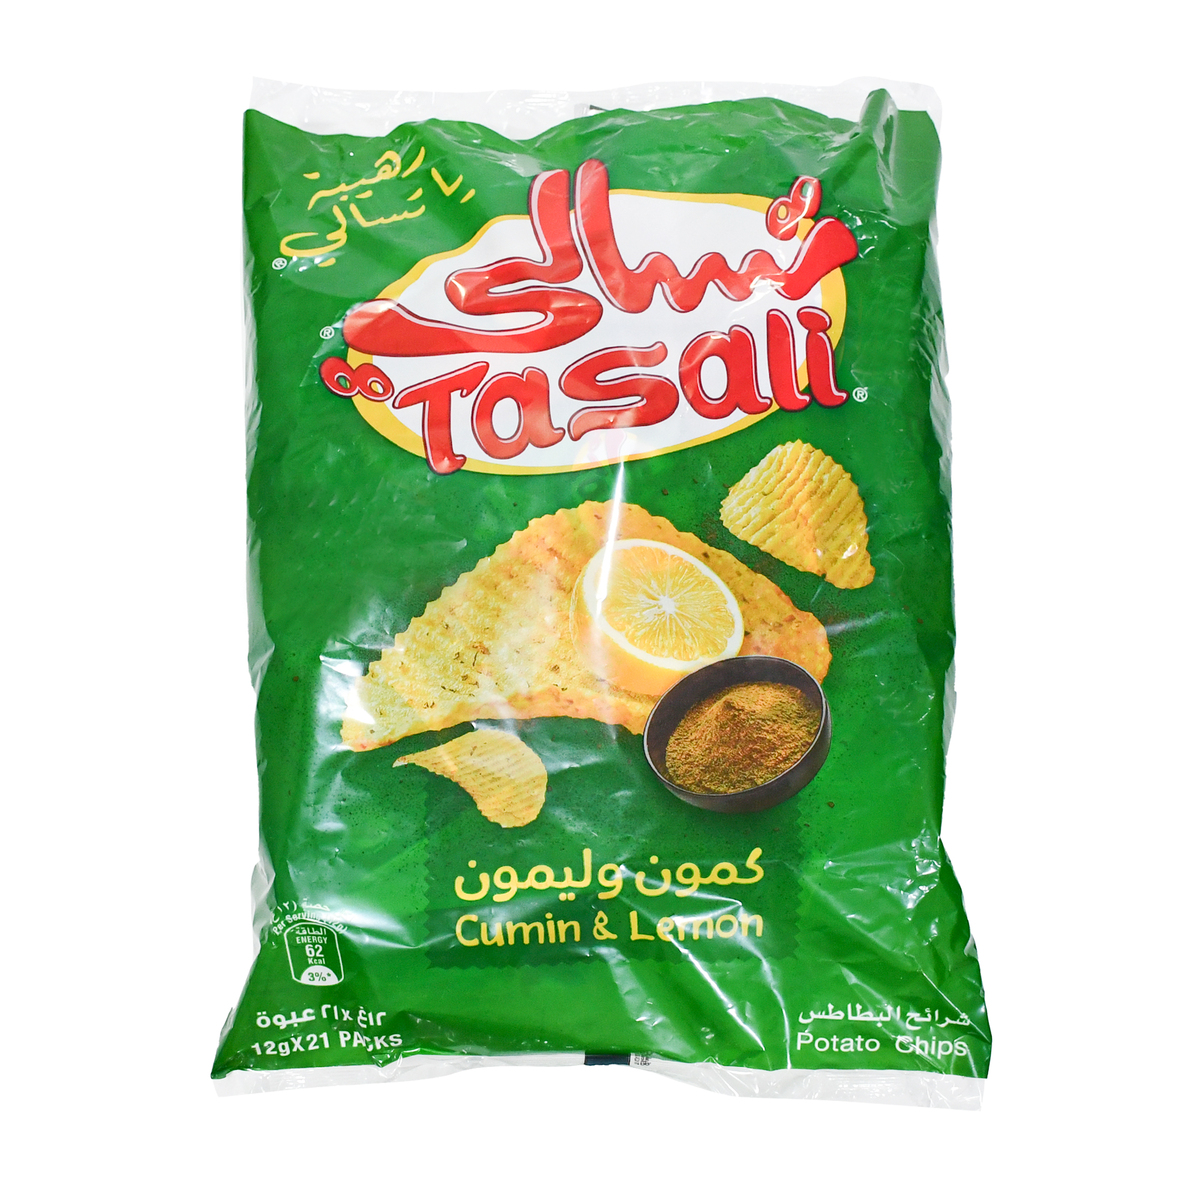 Tasali Cumin & Lemon Potato Chips 12 g